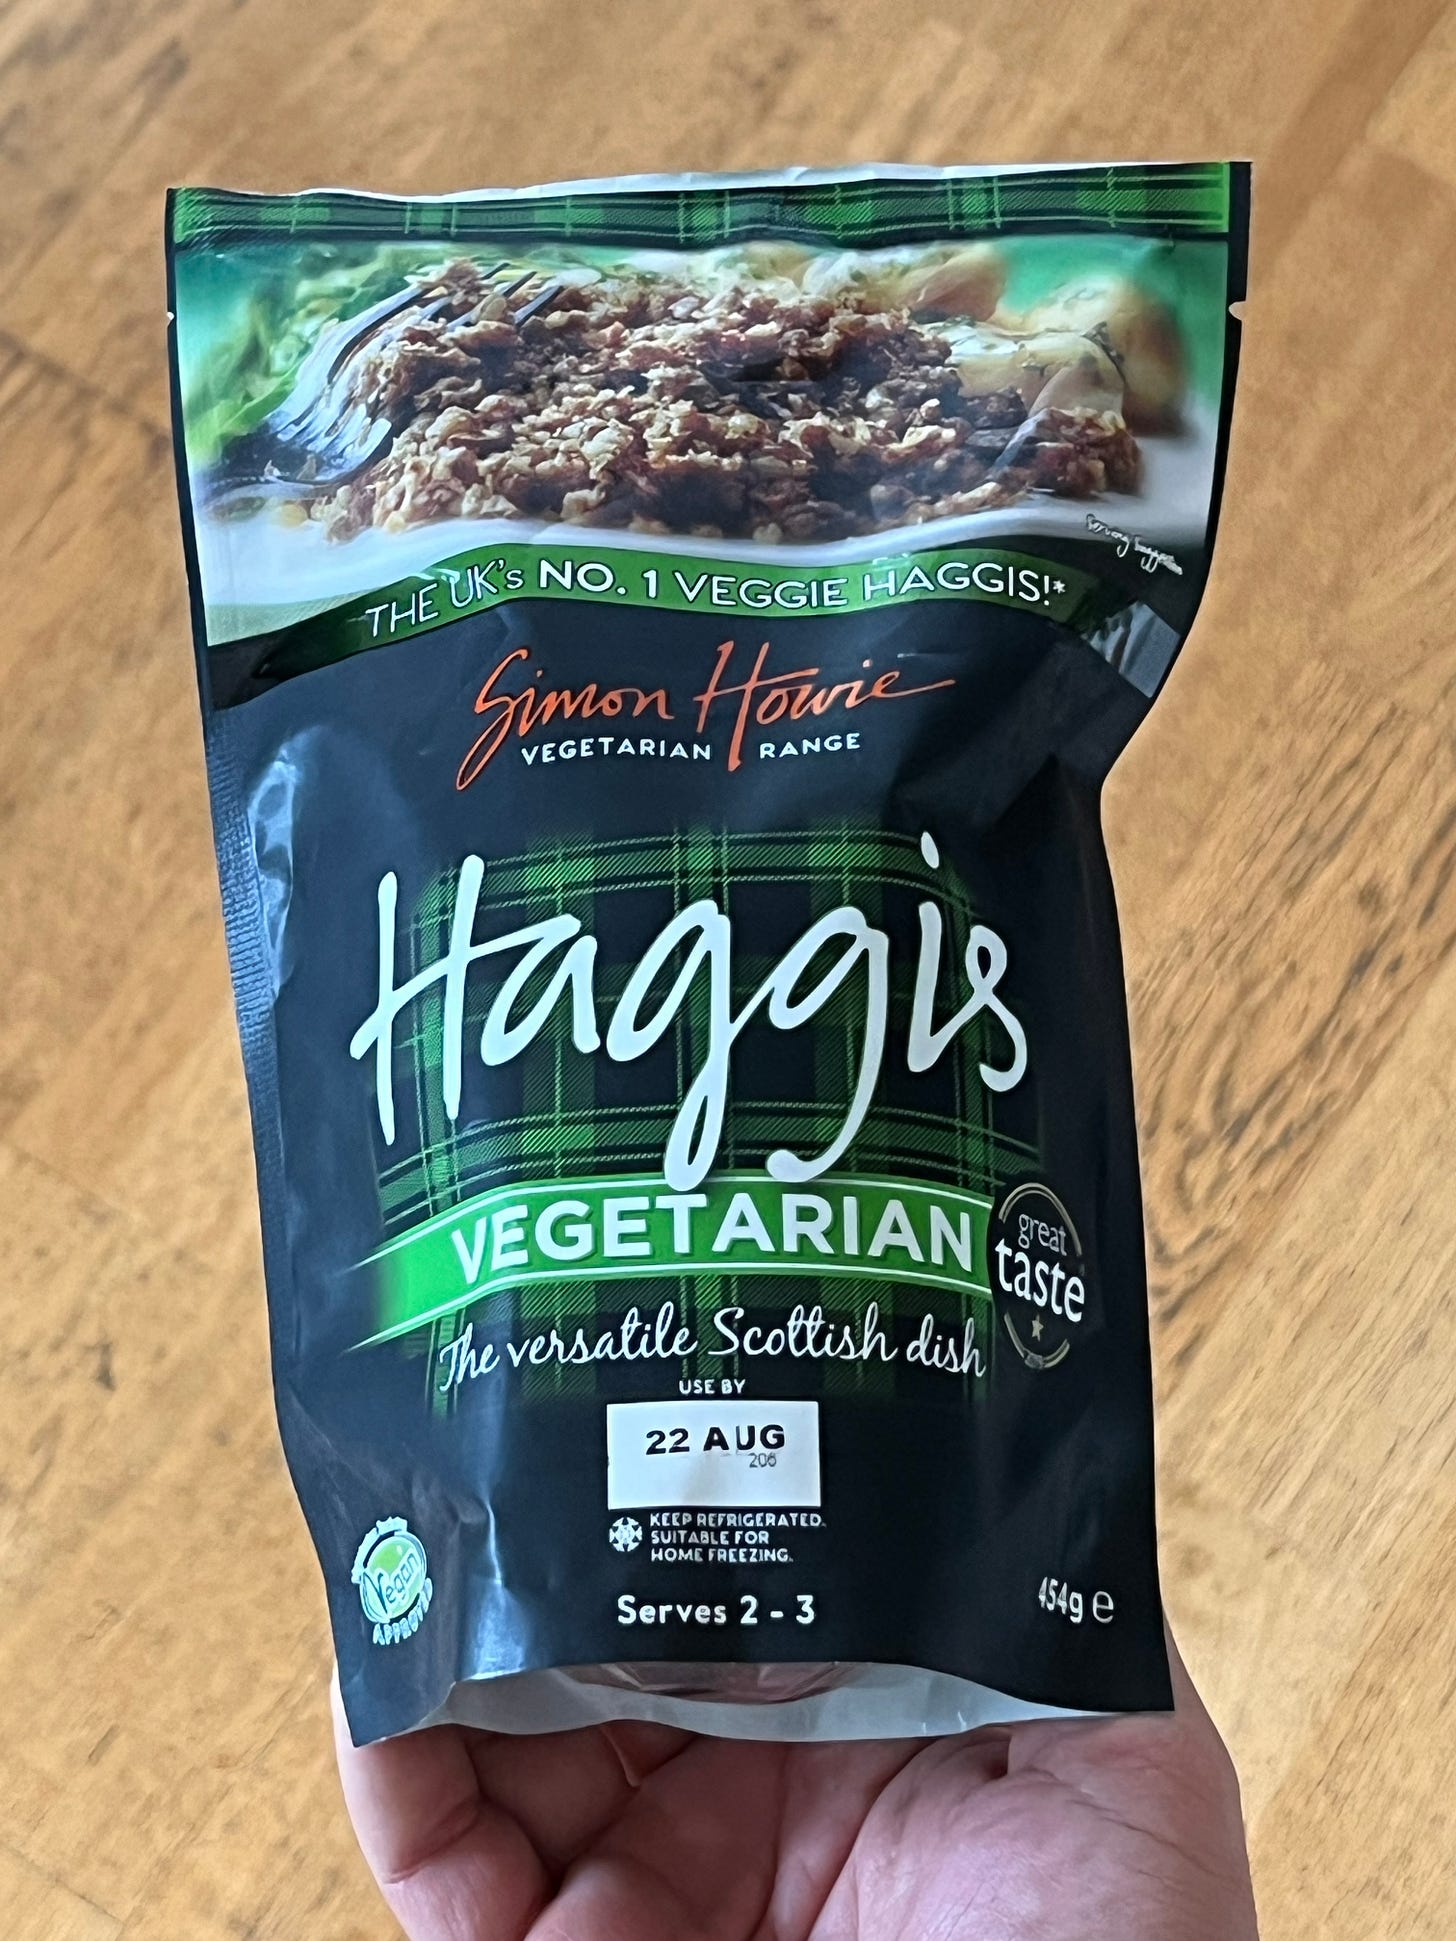 A bag of vegetarian haggis